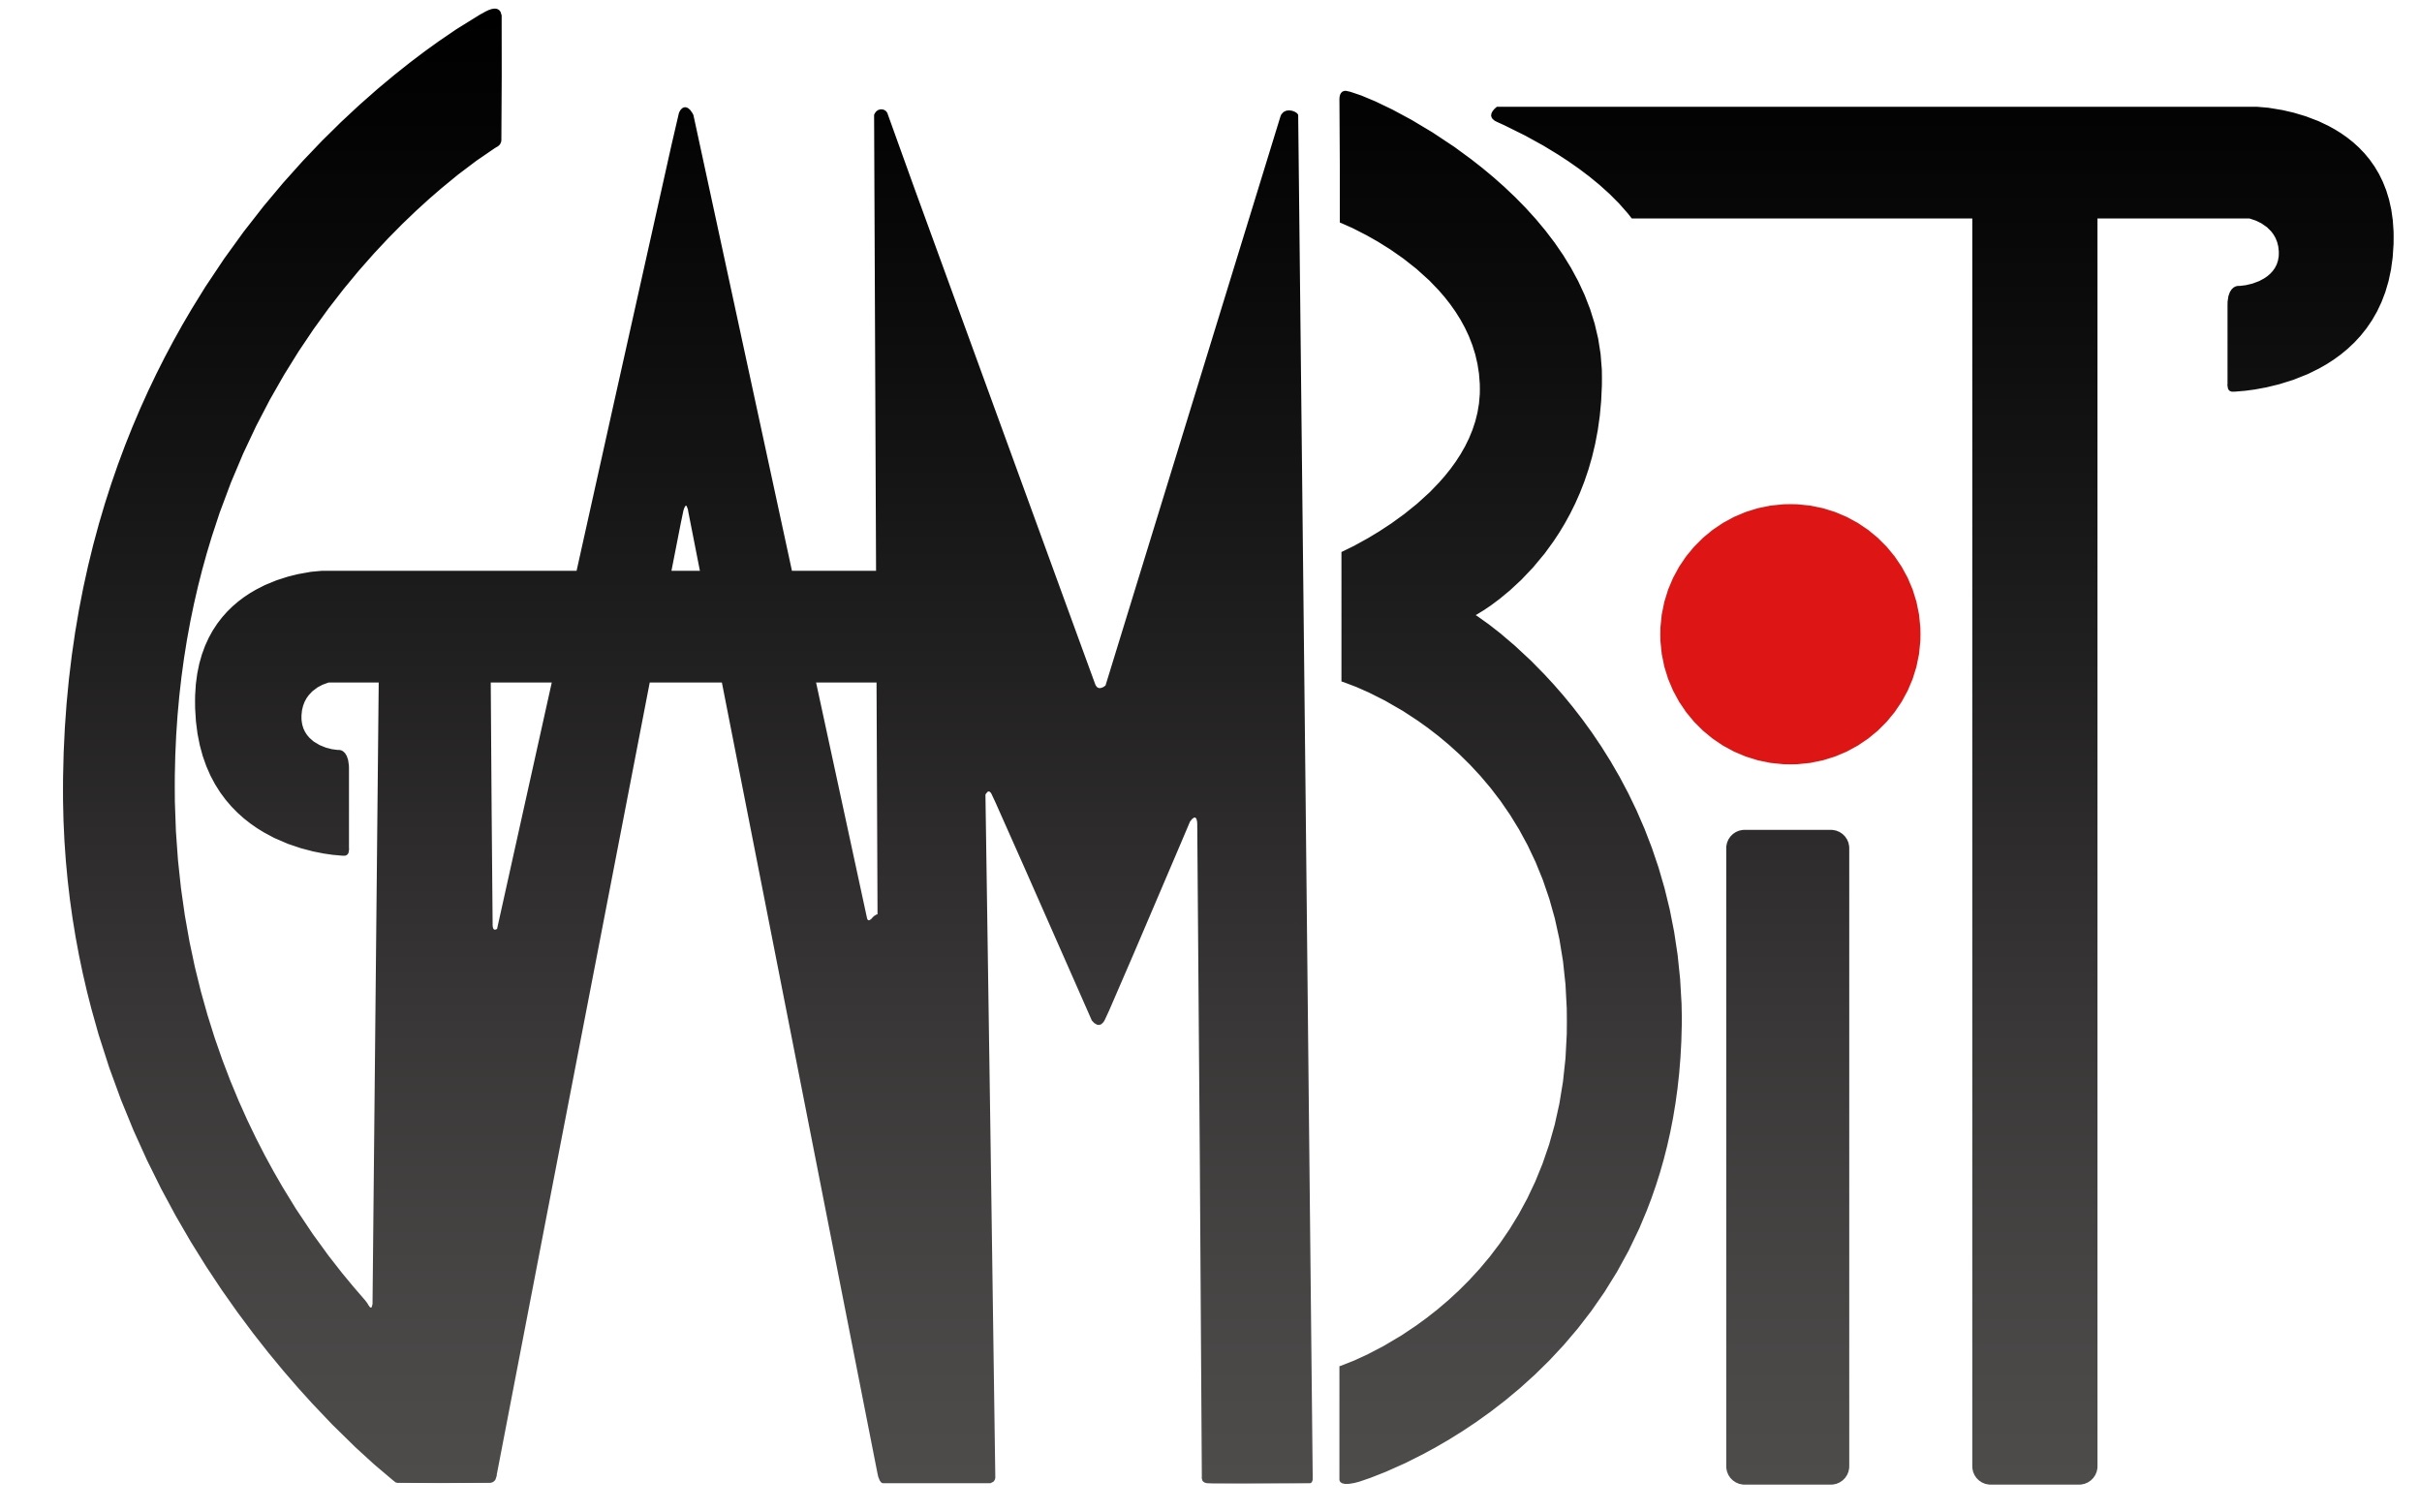 GAMBIT Logo.jpg 8be4bfddfb1a4251acc50aa2f499e442